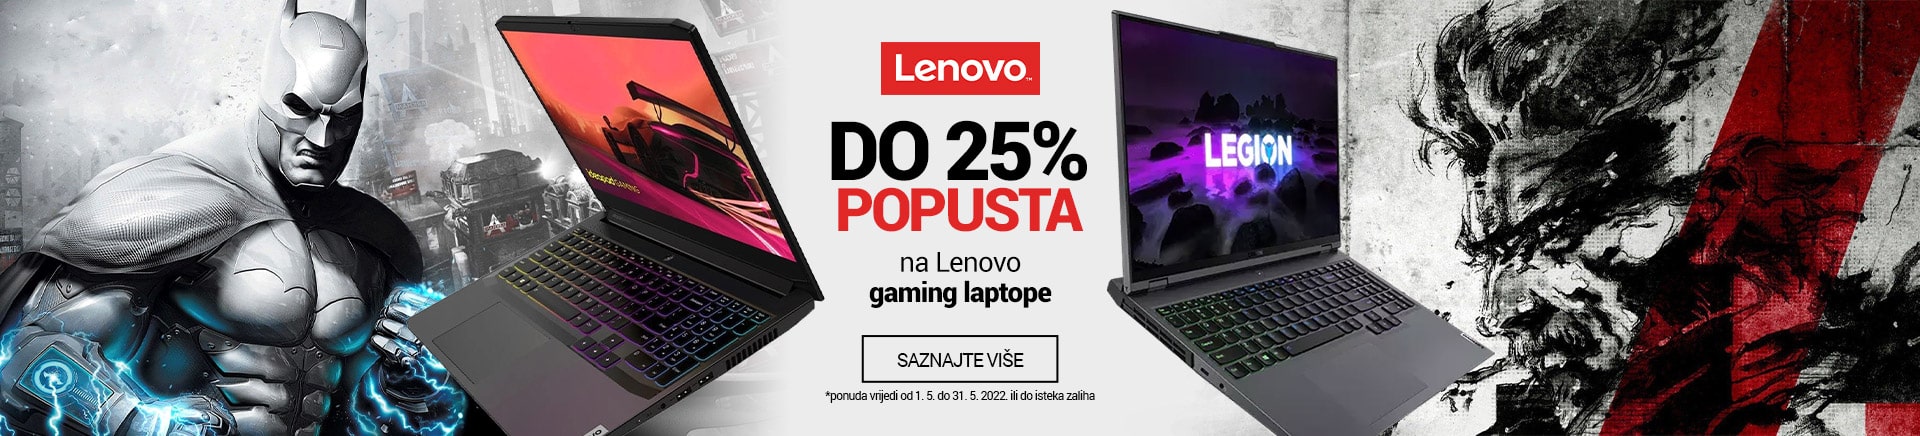 Lenovo gaming laptopi do 25% popusta